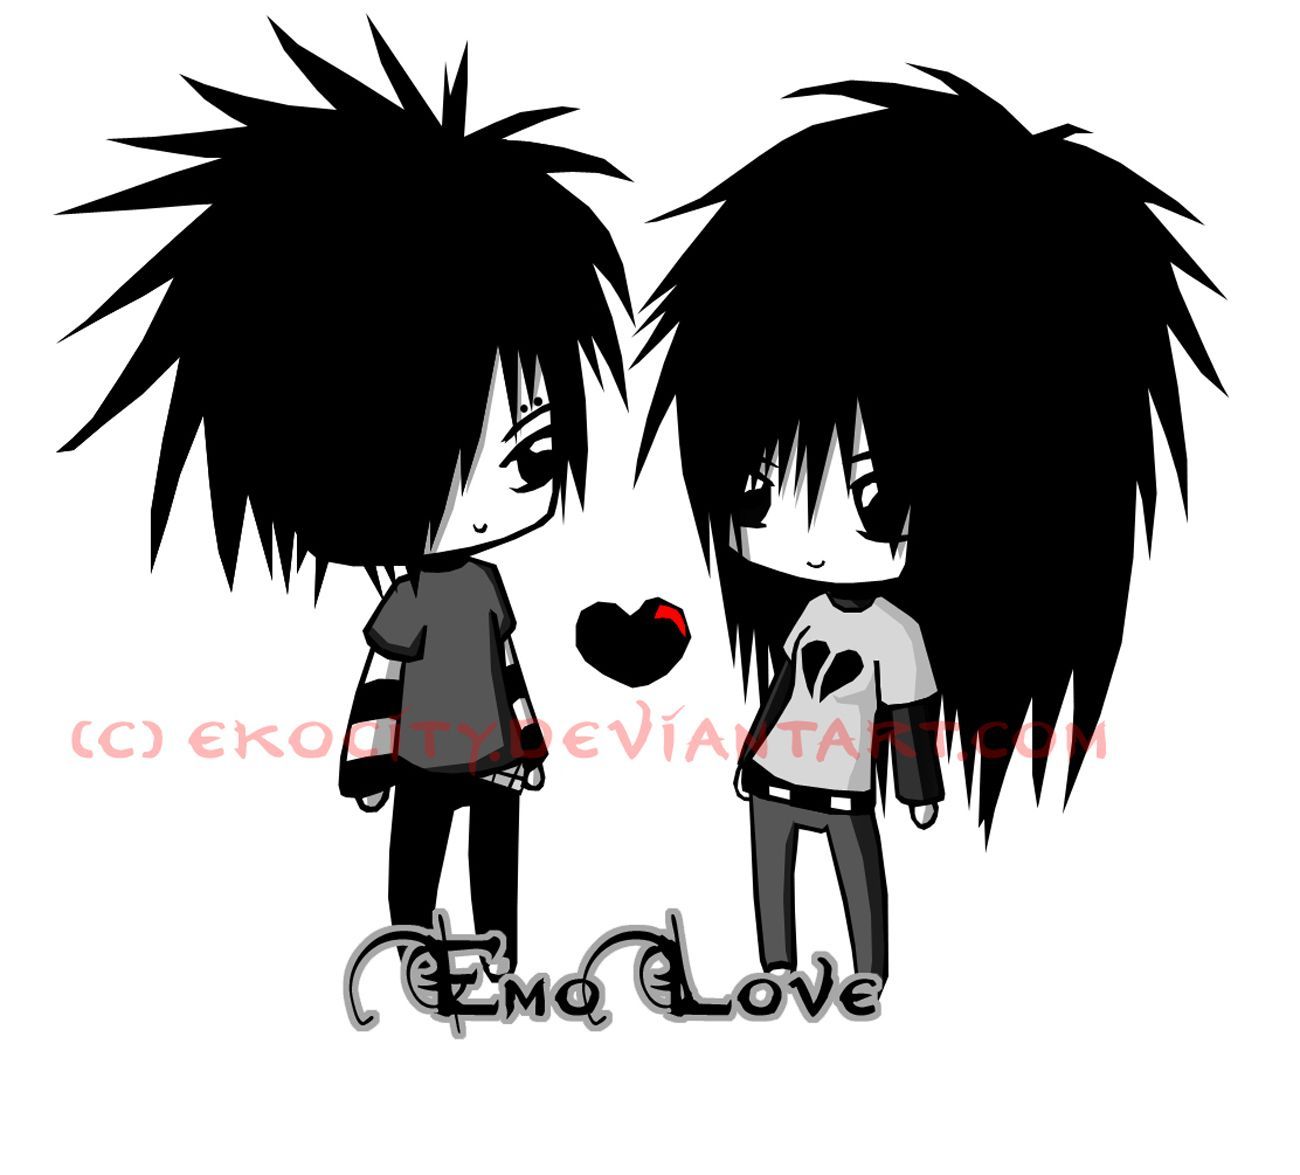 Download Free Wallpaper: Emo love. Emo love, Emo wallpaper, Emo art